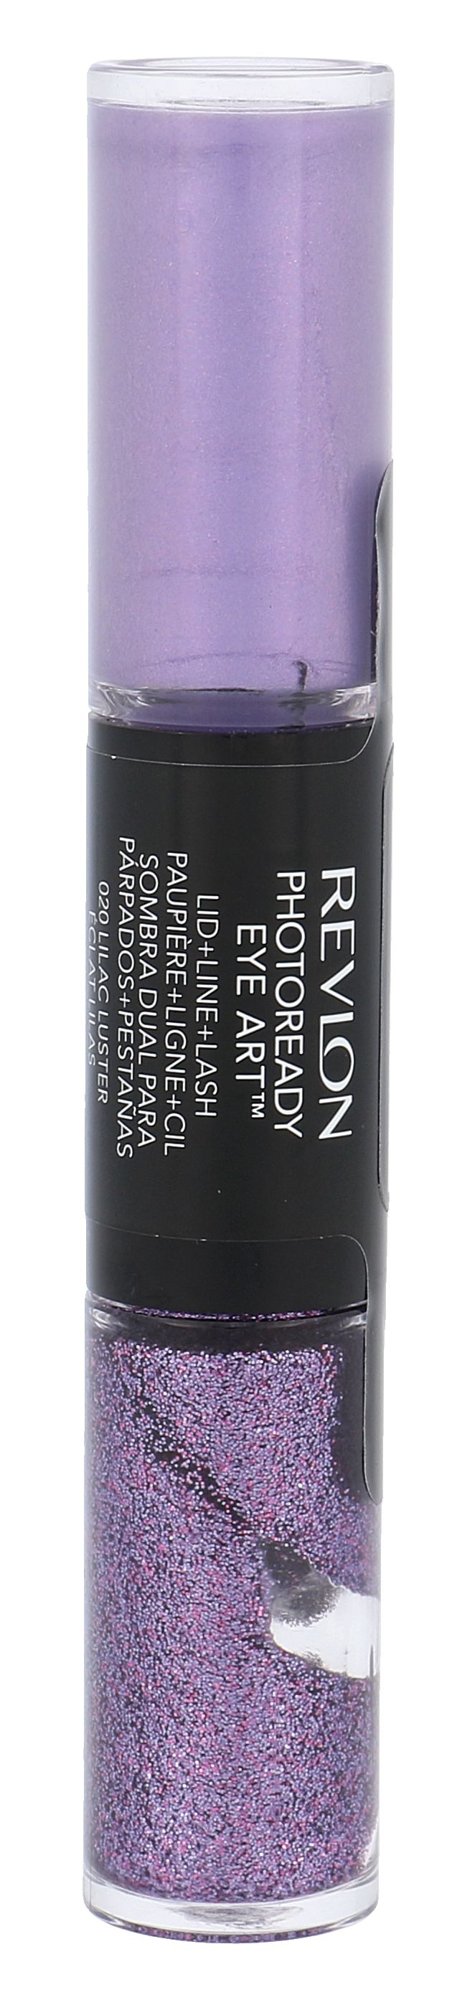 Revlon Photoready Eye Art šešėliai